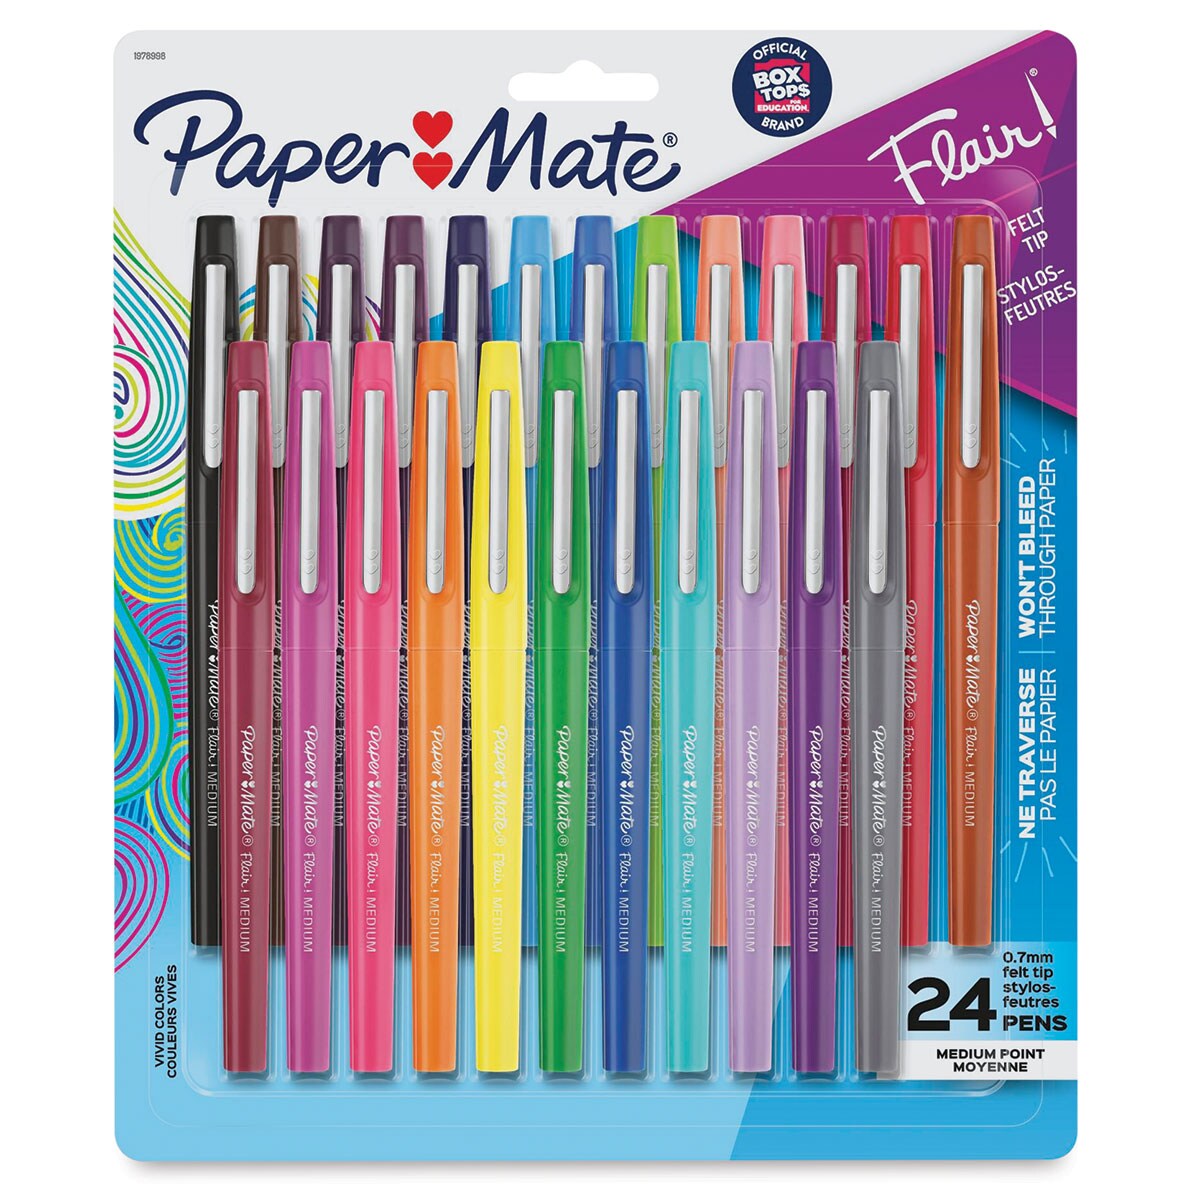 Paper Mate Flair Guard Pen - Tropical Colors, Medium Tip, Set of 24